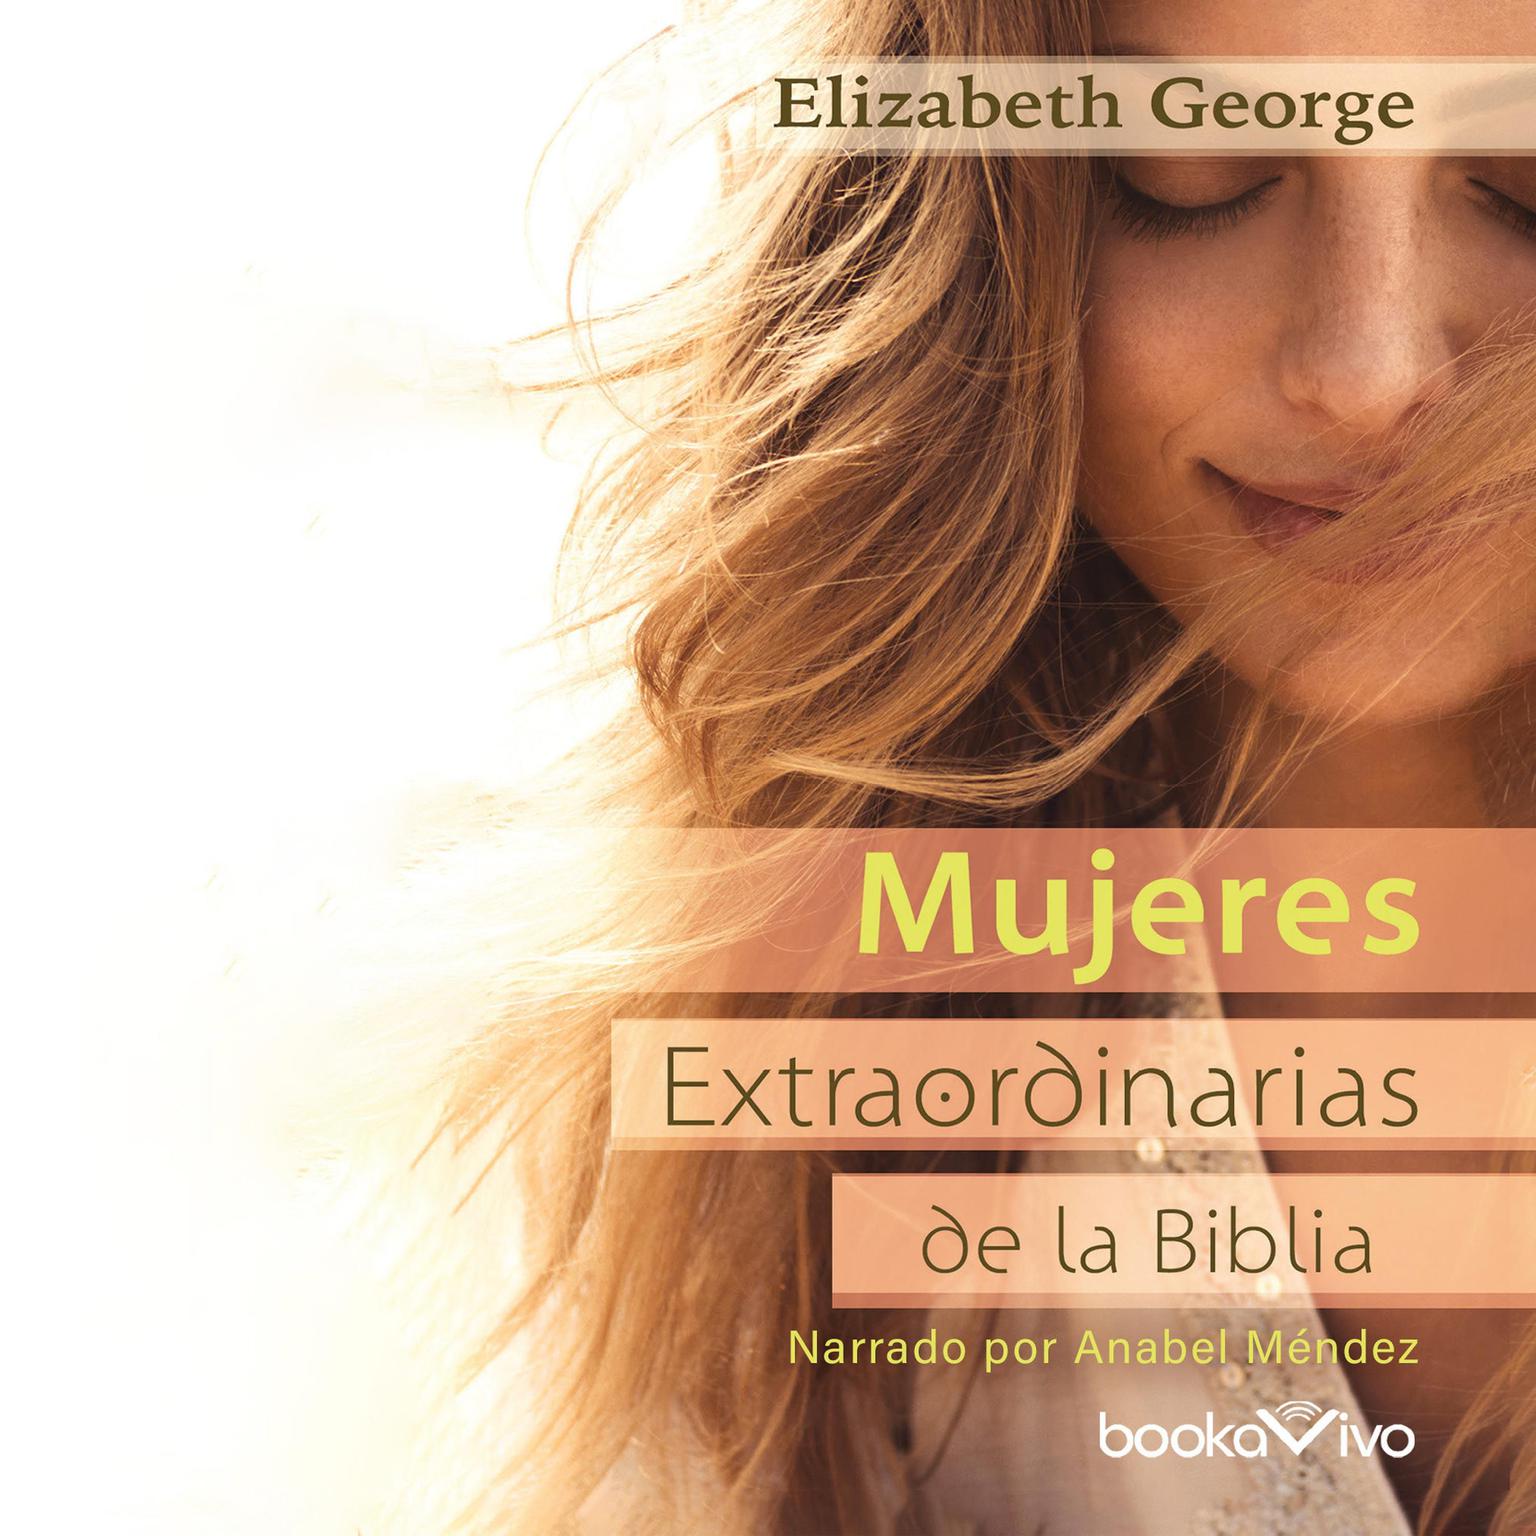 Mujeres extraordinarias de la Biblia (The Remarkable Women of the Bible) Audiobook, by Elizabeth George